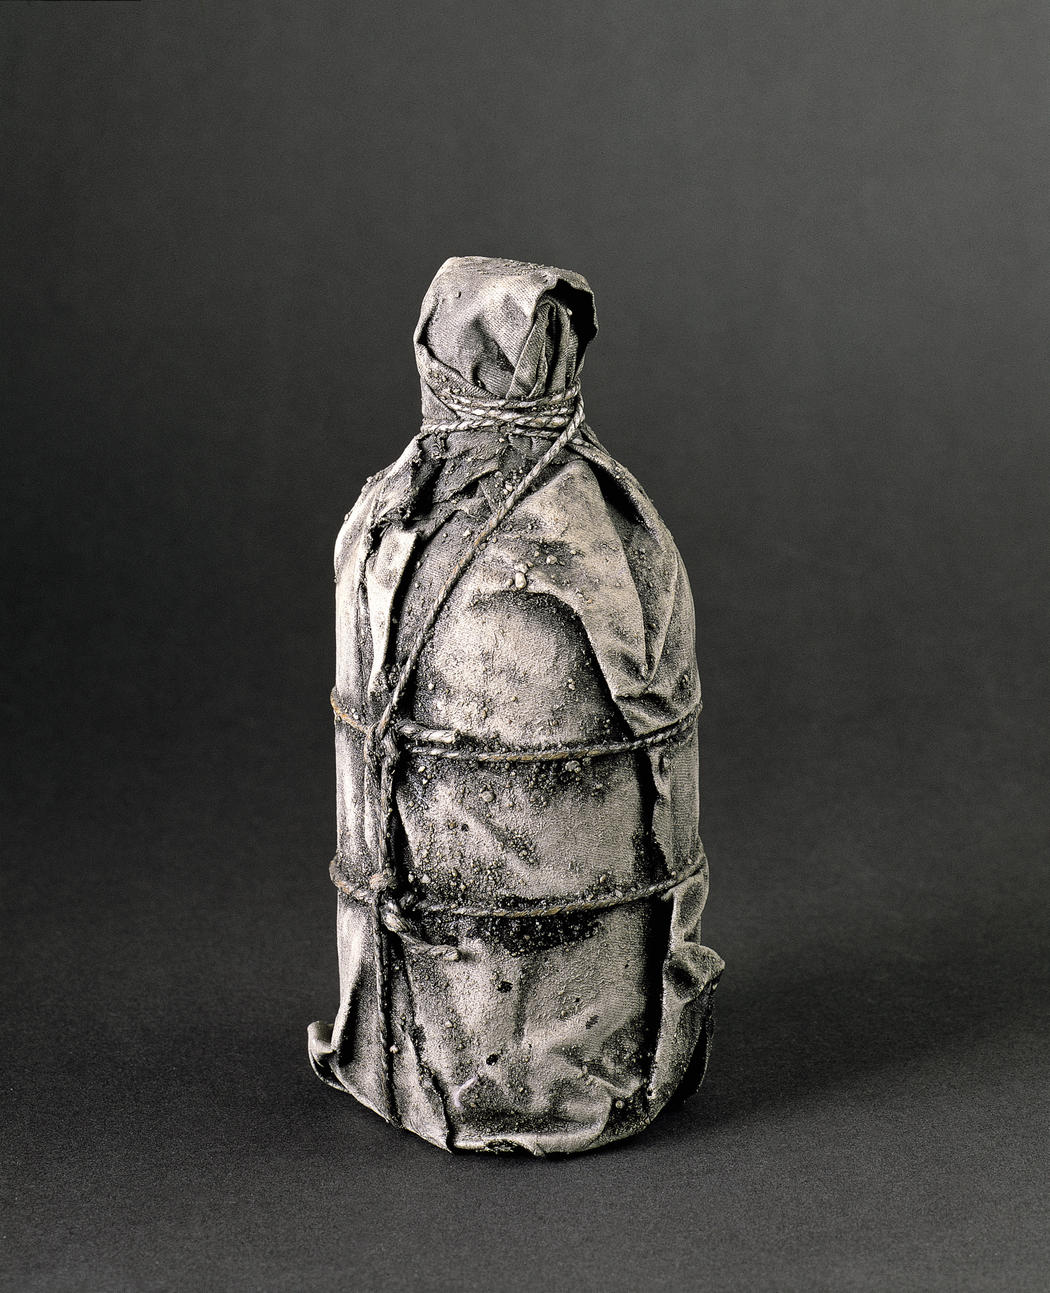 Bottiglia impacchettata (1958; tessuto, corda, lacca, vernice, sabbia, bottiglia; 20,3 x 7,6 cm; Carbondale, Collezione Kimiko e John Powers)